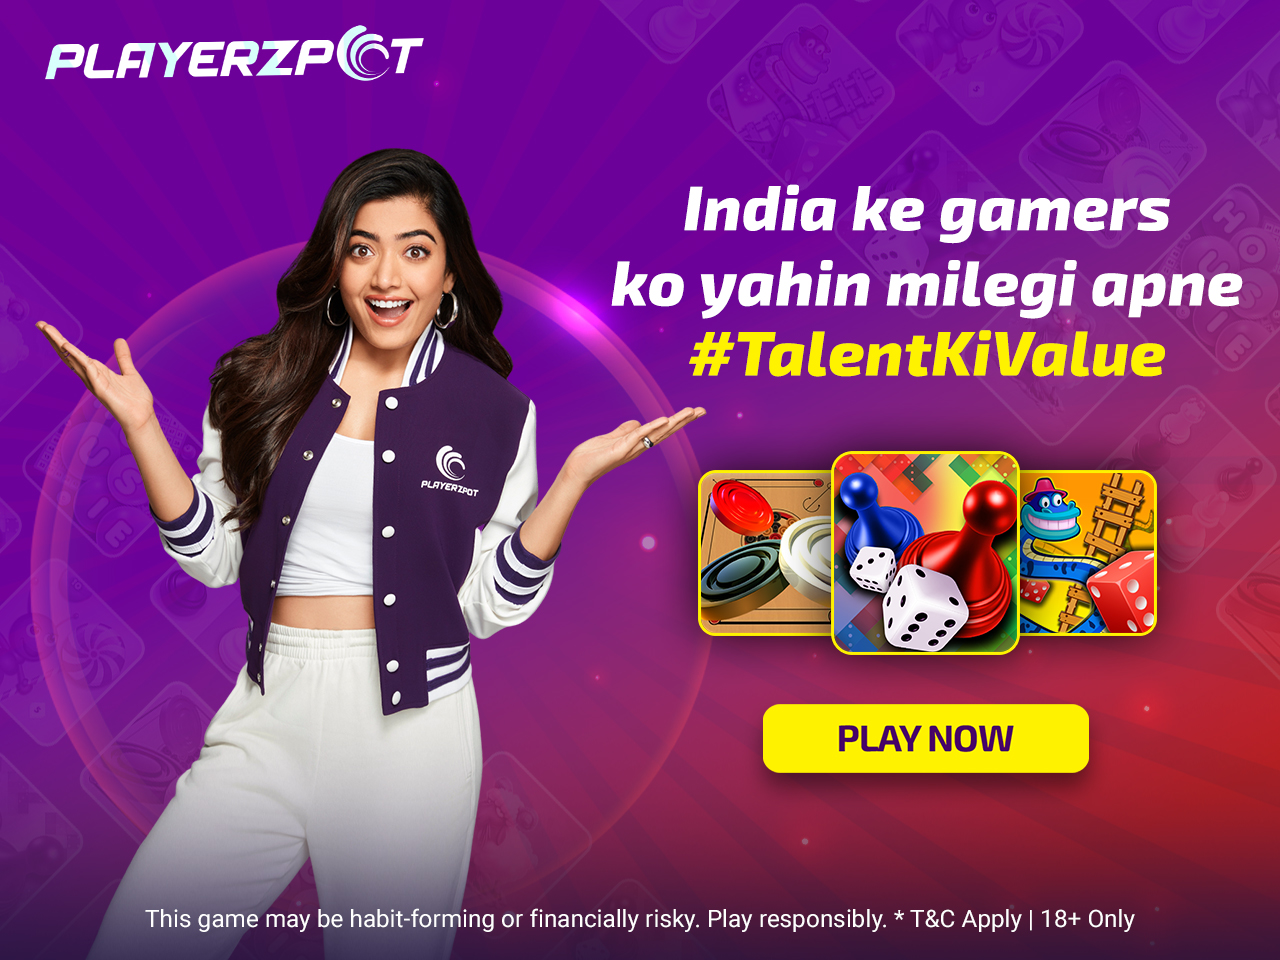 PlayerzPot Launches New Campaign #TalentKiValue With Brand Ambassador Rashmika Mandanna